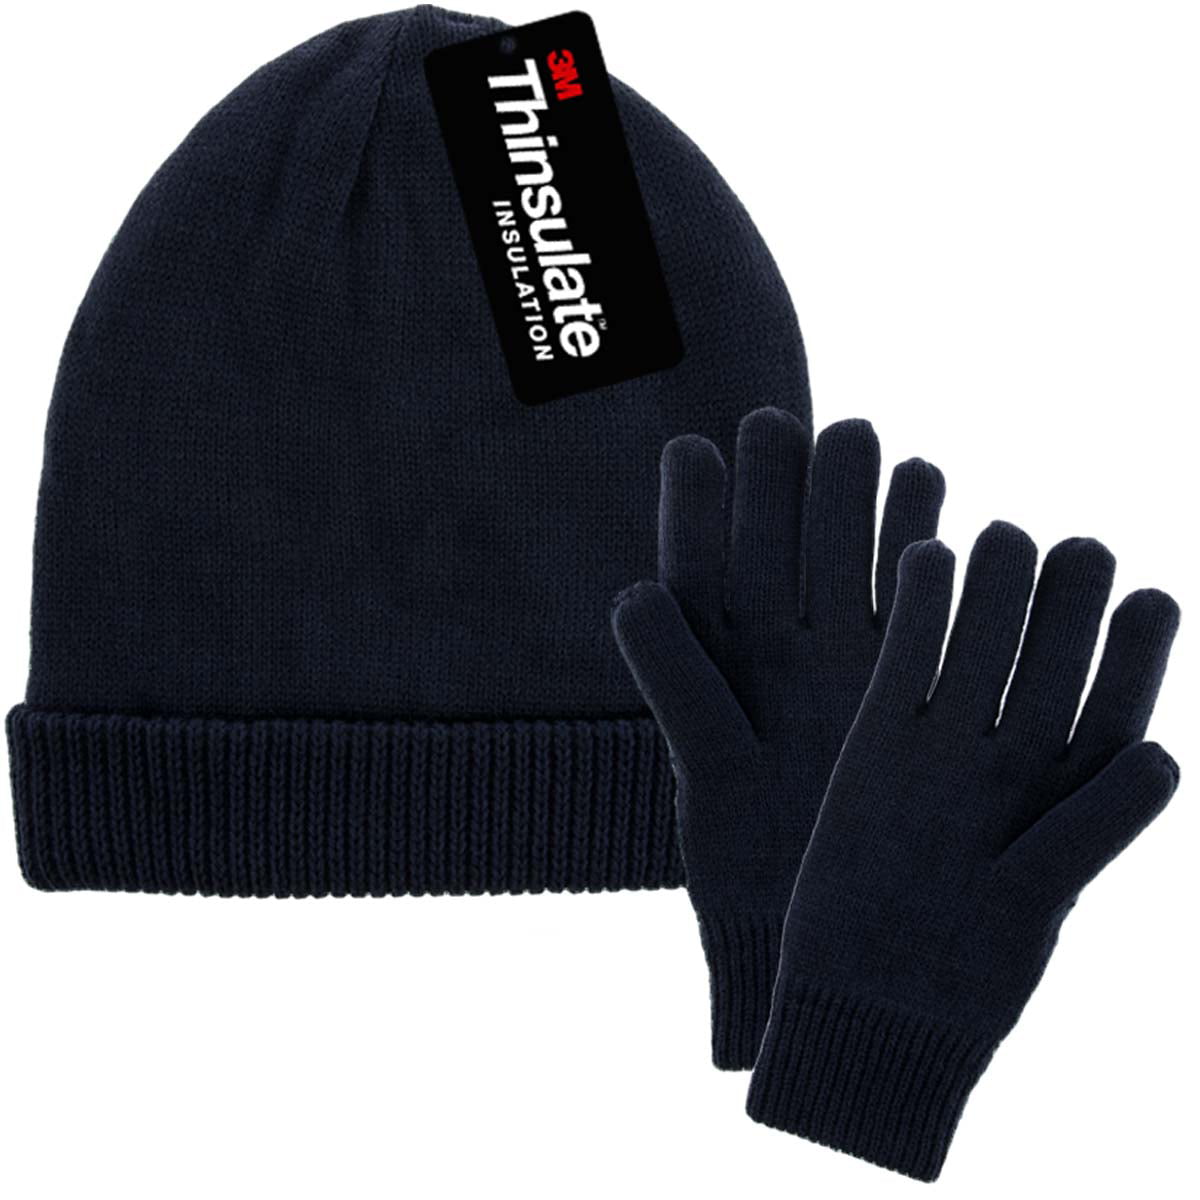 3M Thinsulate Kids Winter Polar Fleece Gloves